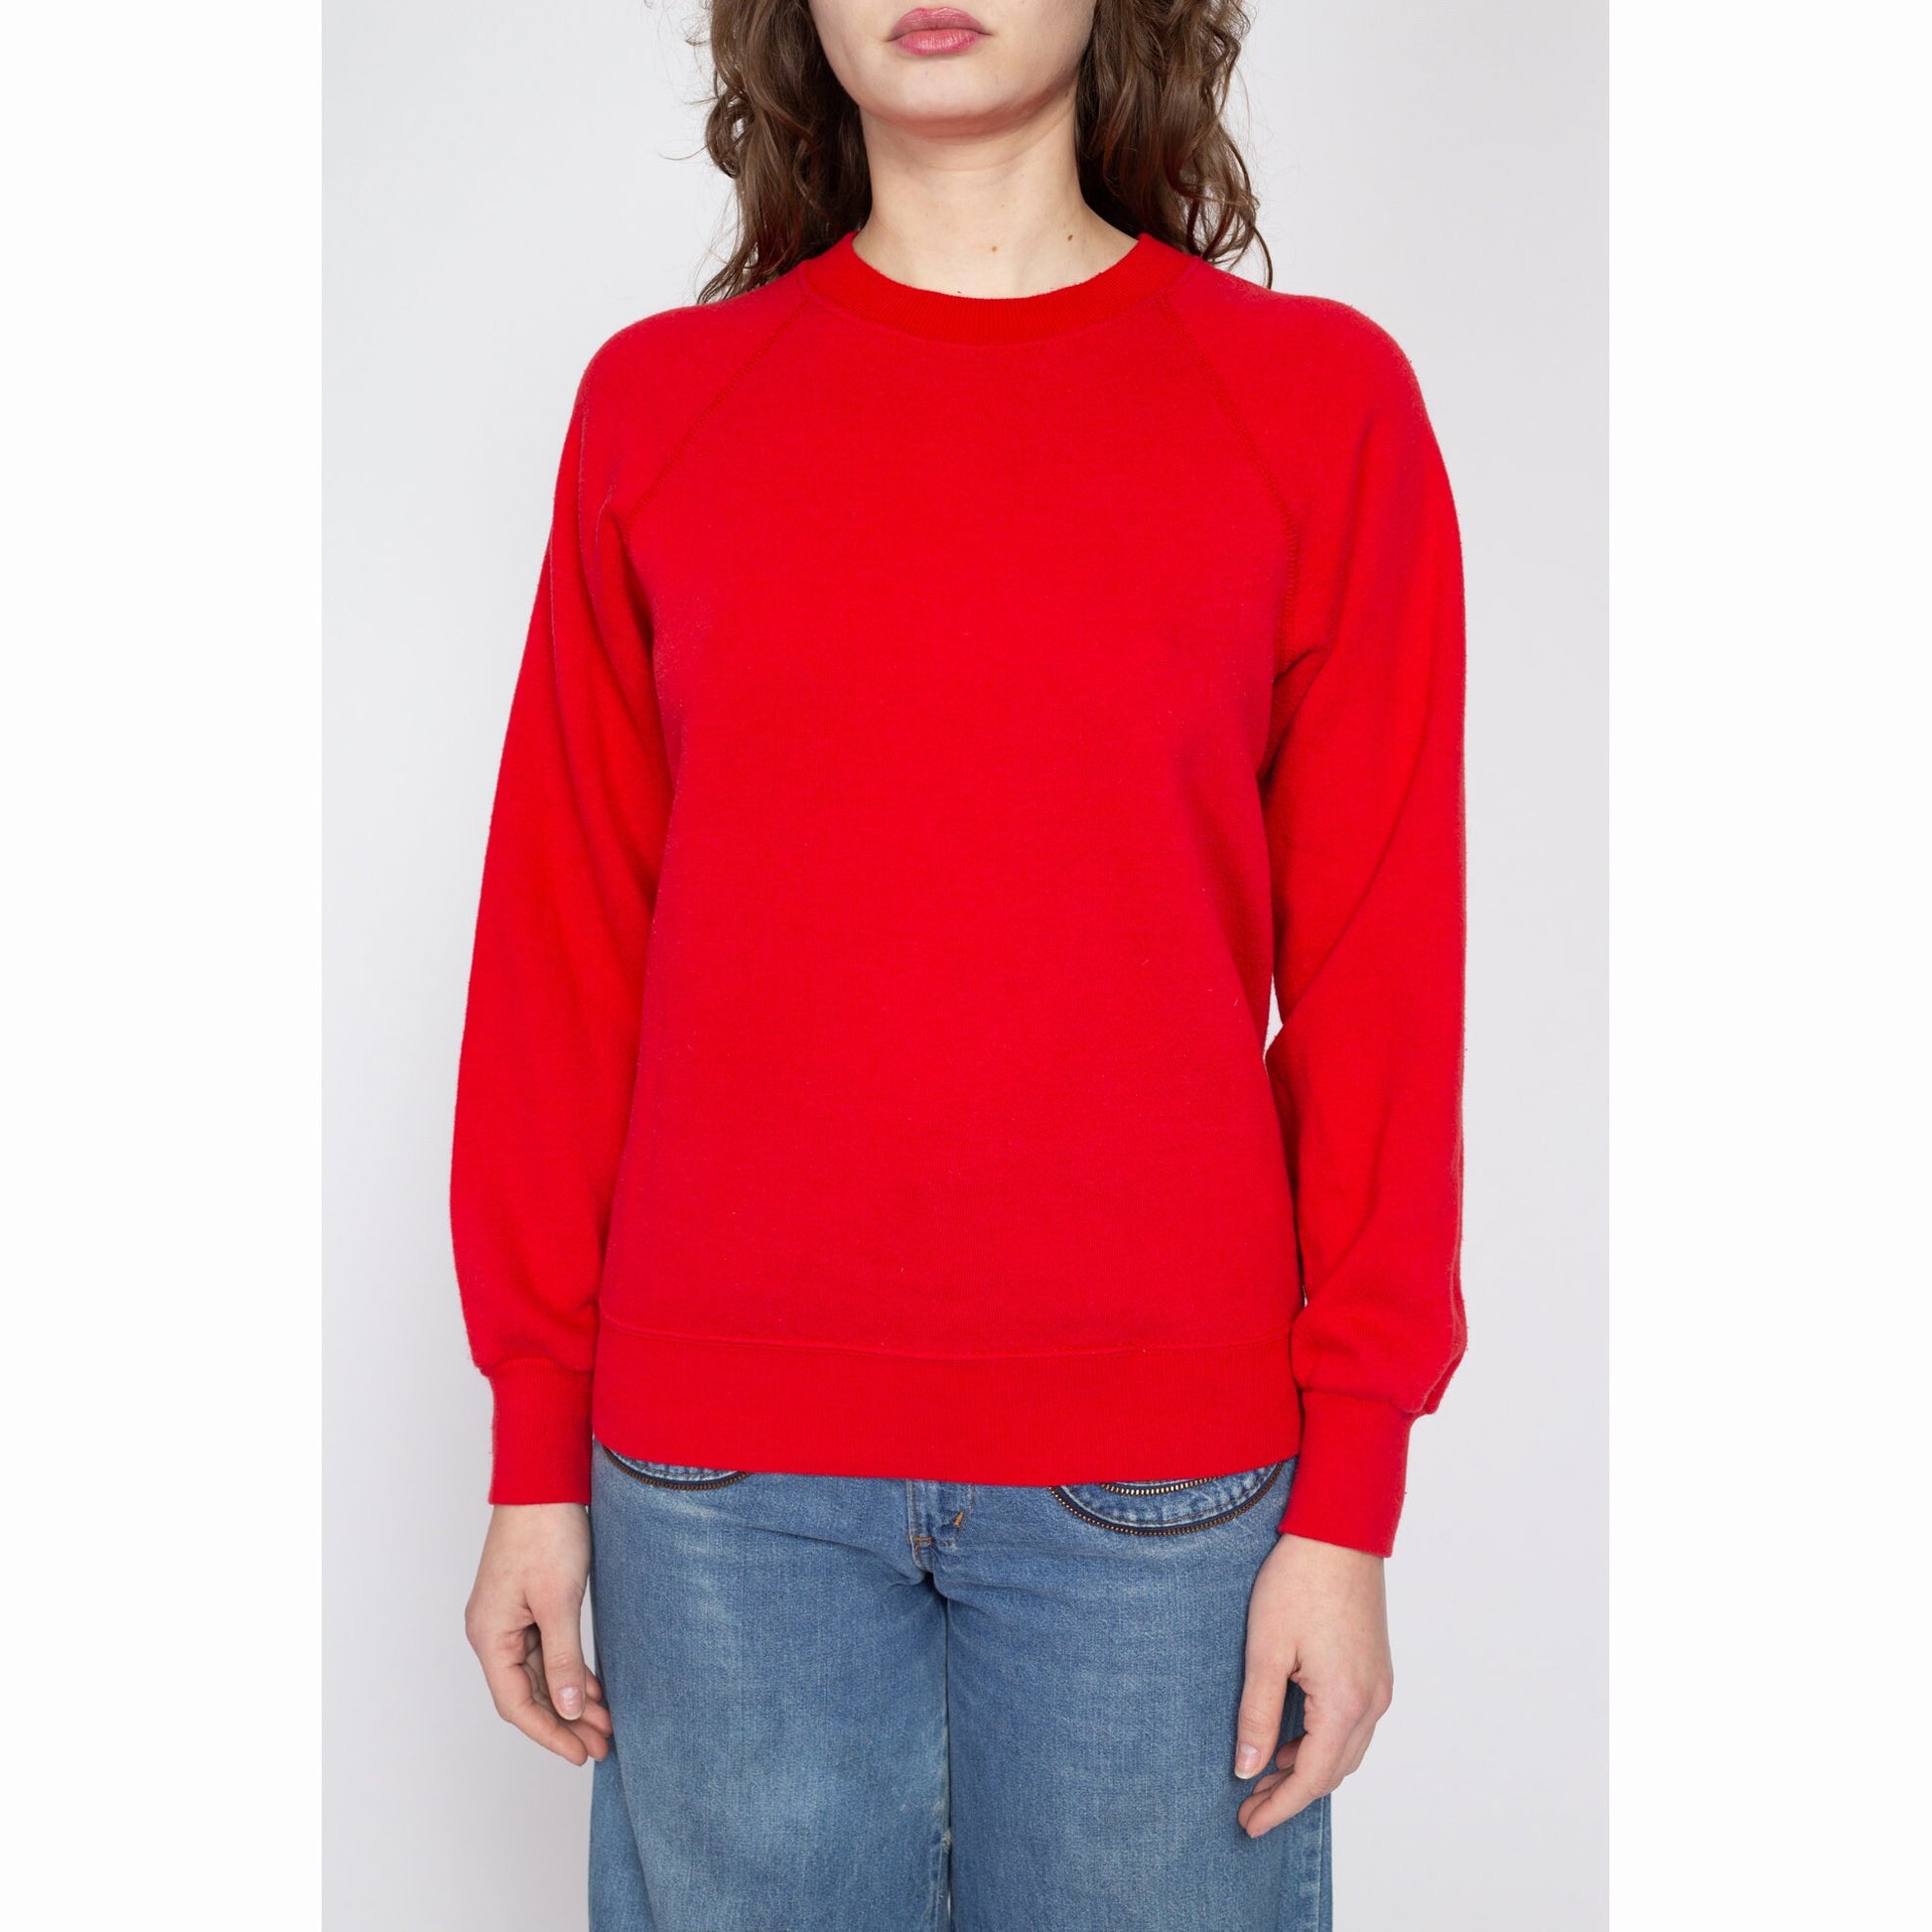 Medium 80s Red Raglan Sweatshirt | Vintage Slouchy Plain Crewneck Pullover